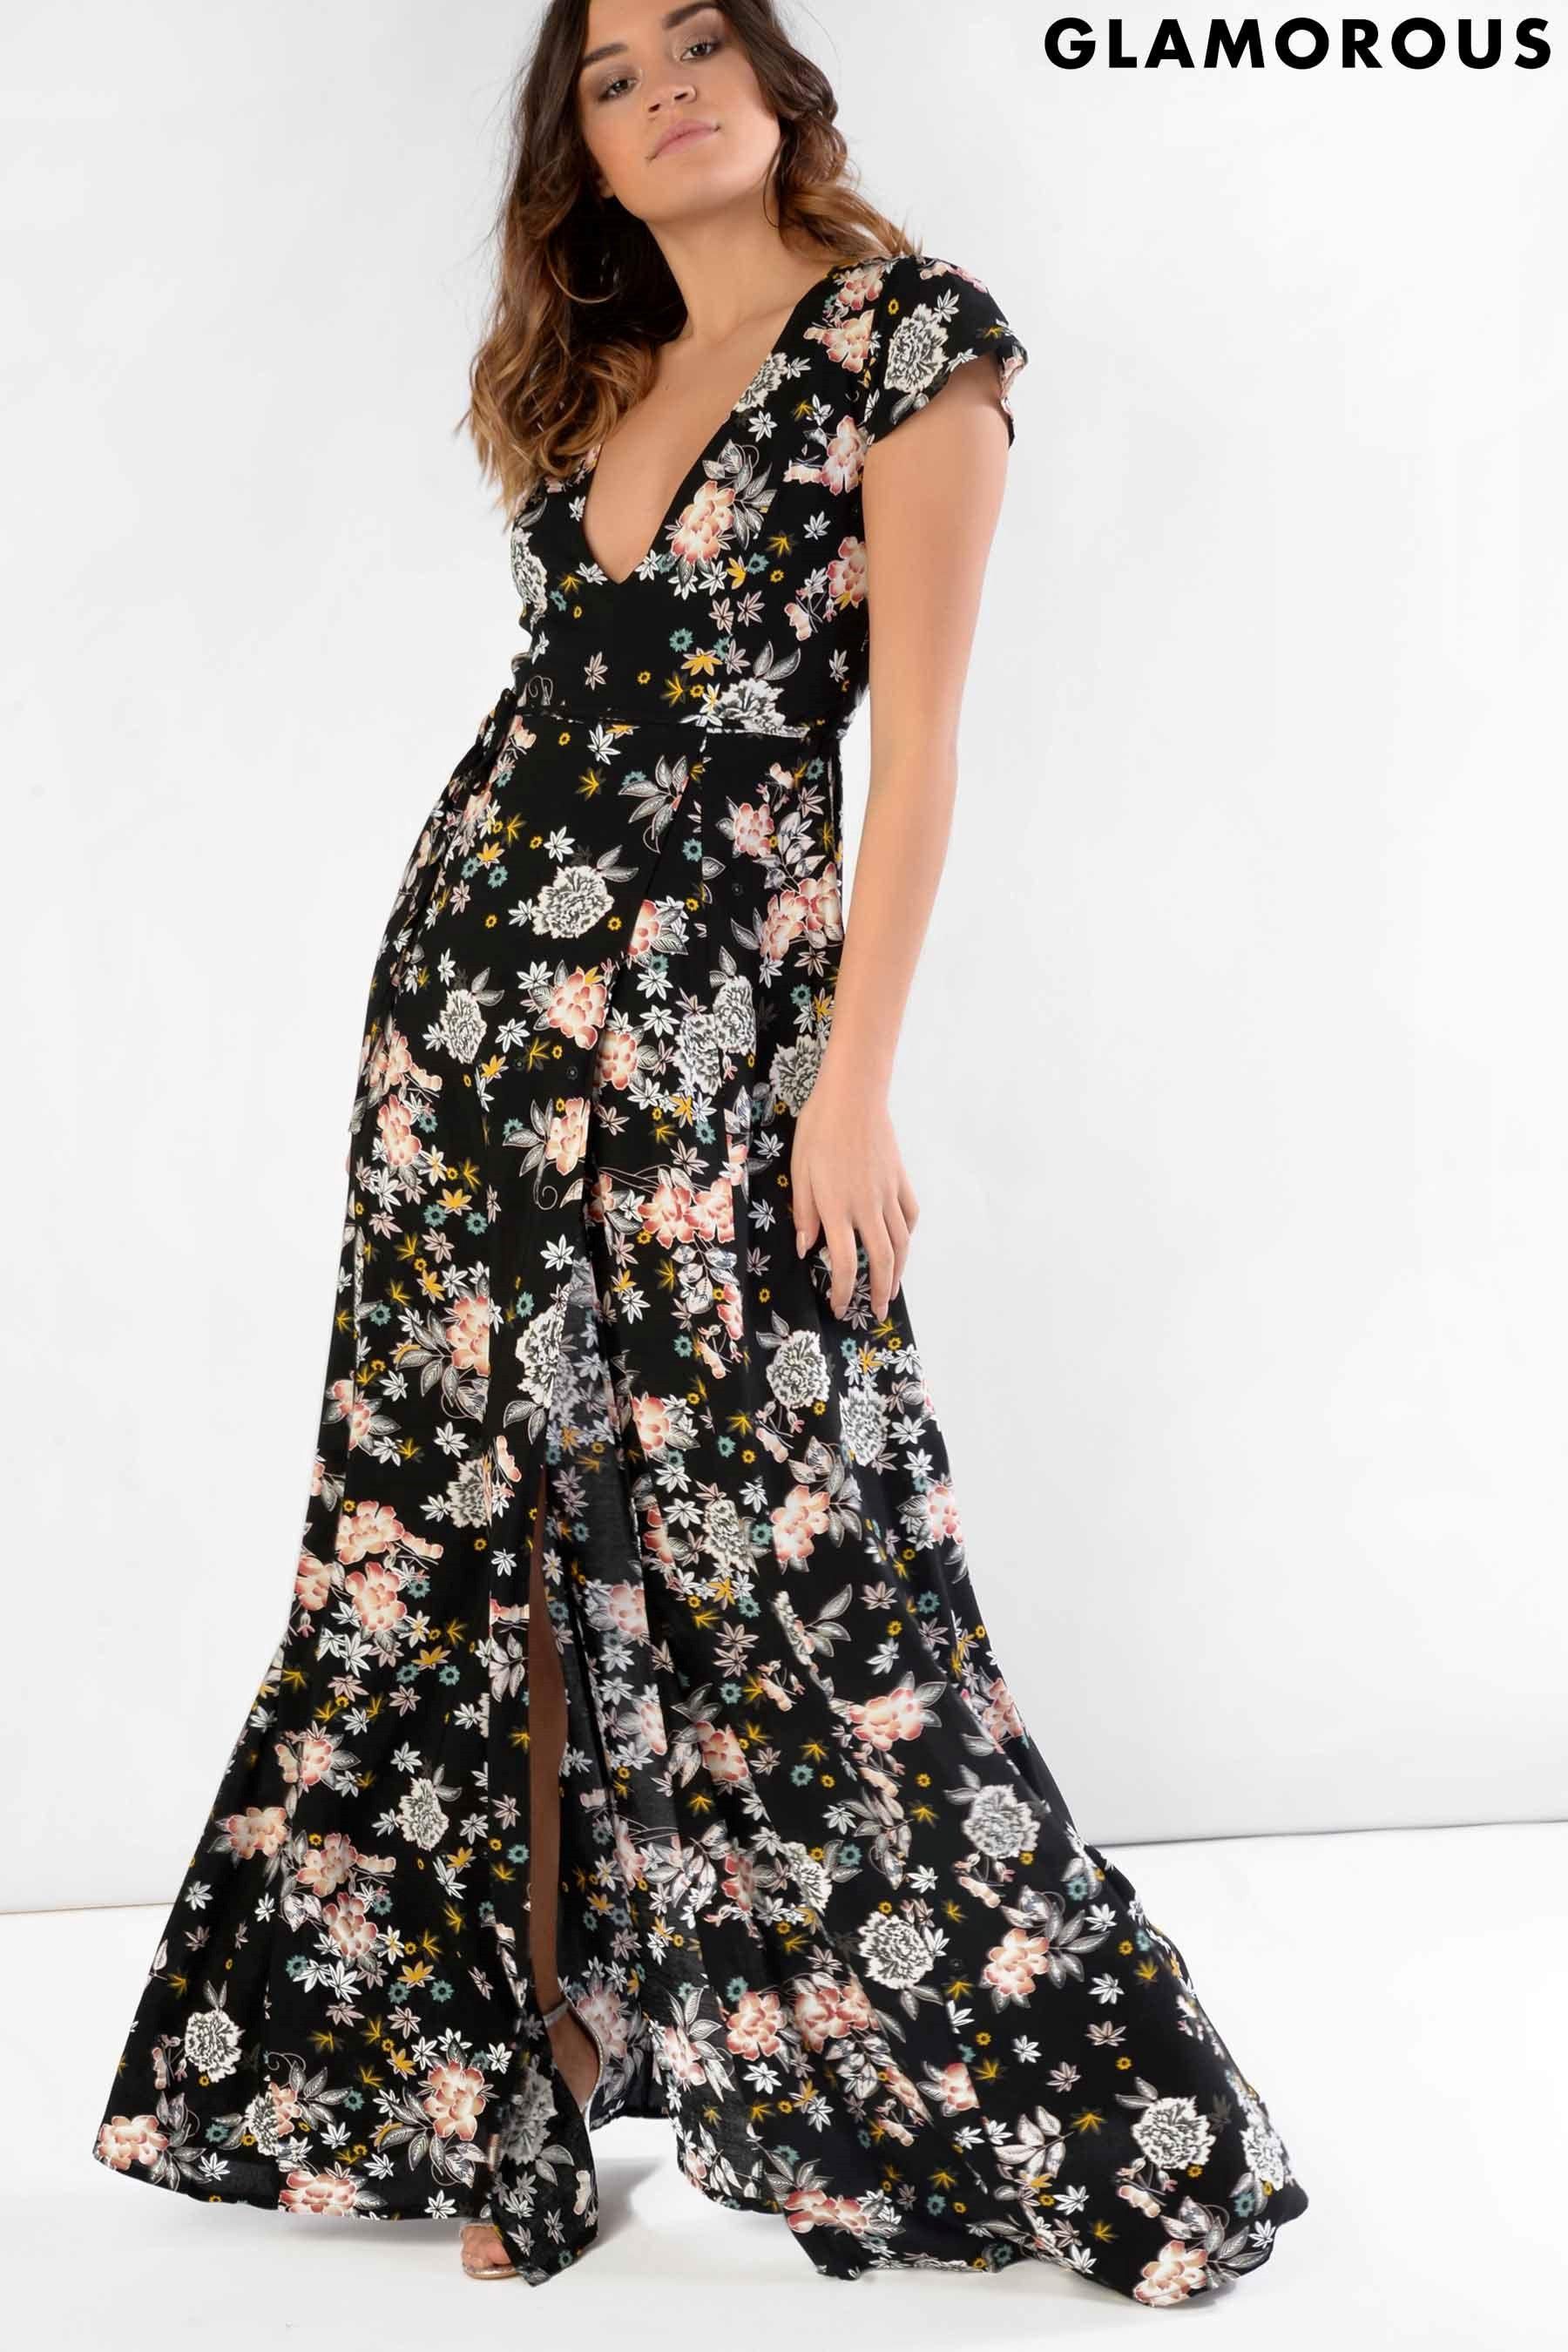 Glamorous Printed Maxi Dress